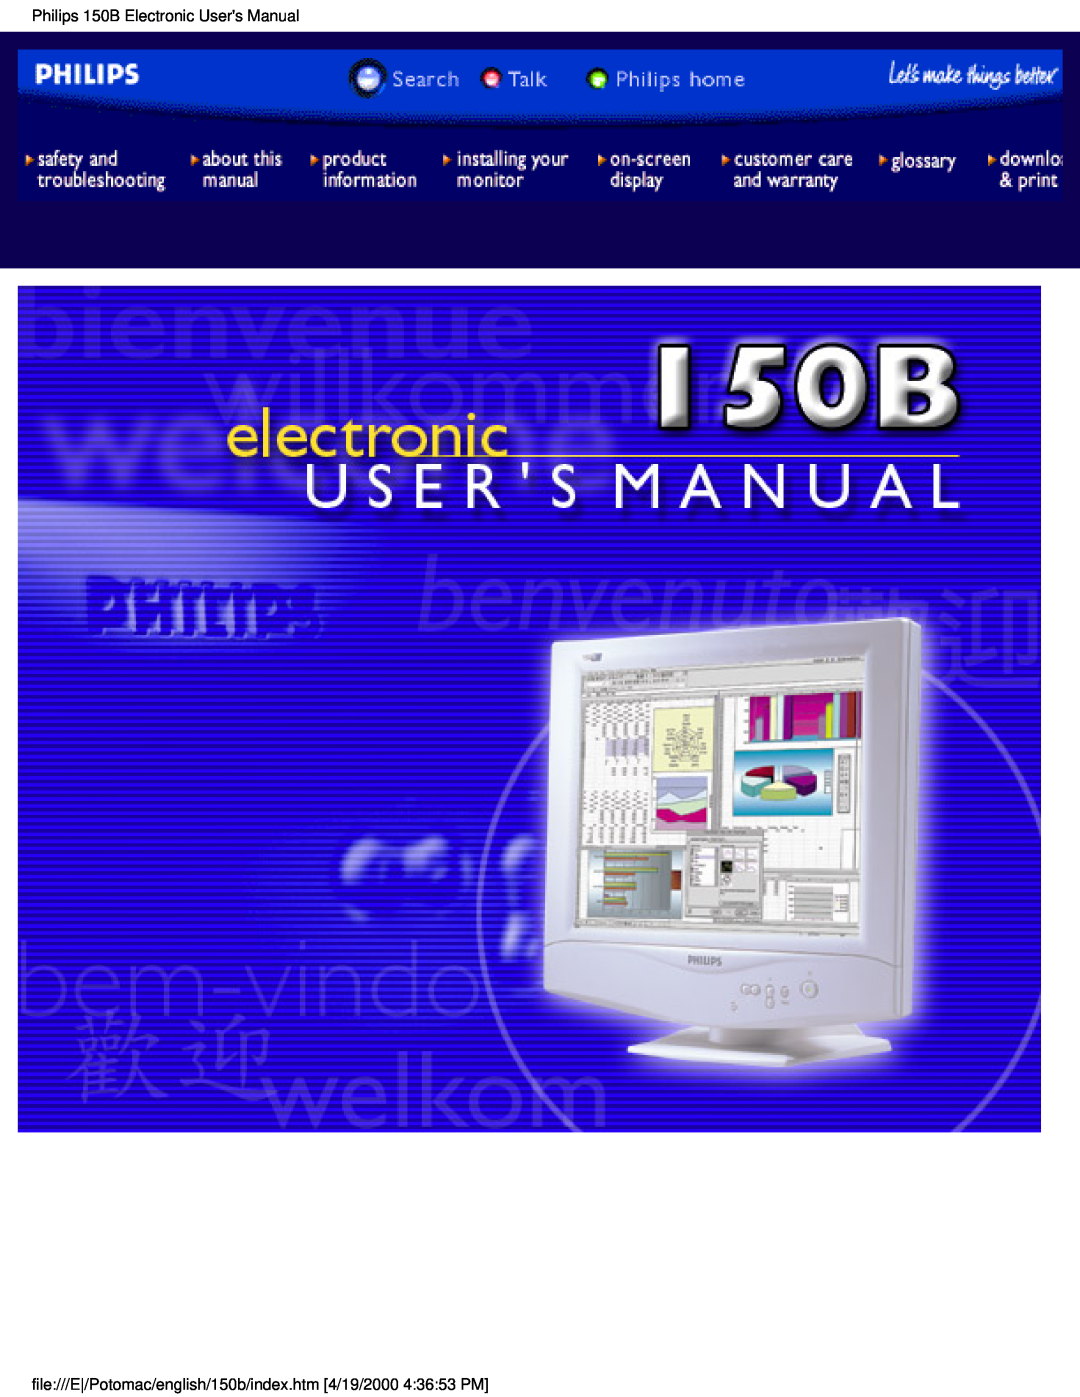 Philips user manual Philips 150B Electronic Users Manual, file///E/Potomac/english/150b/index.htm 4/19/2000 43653 PM 